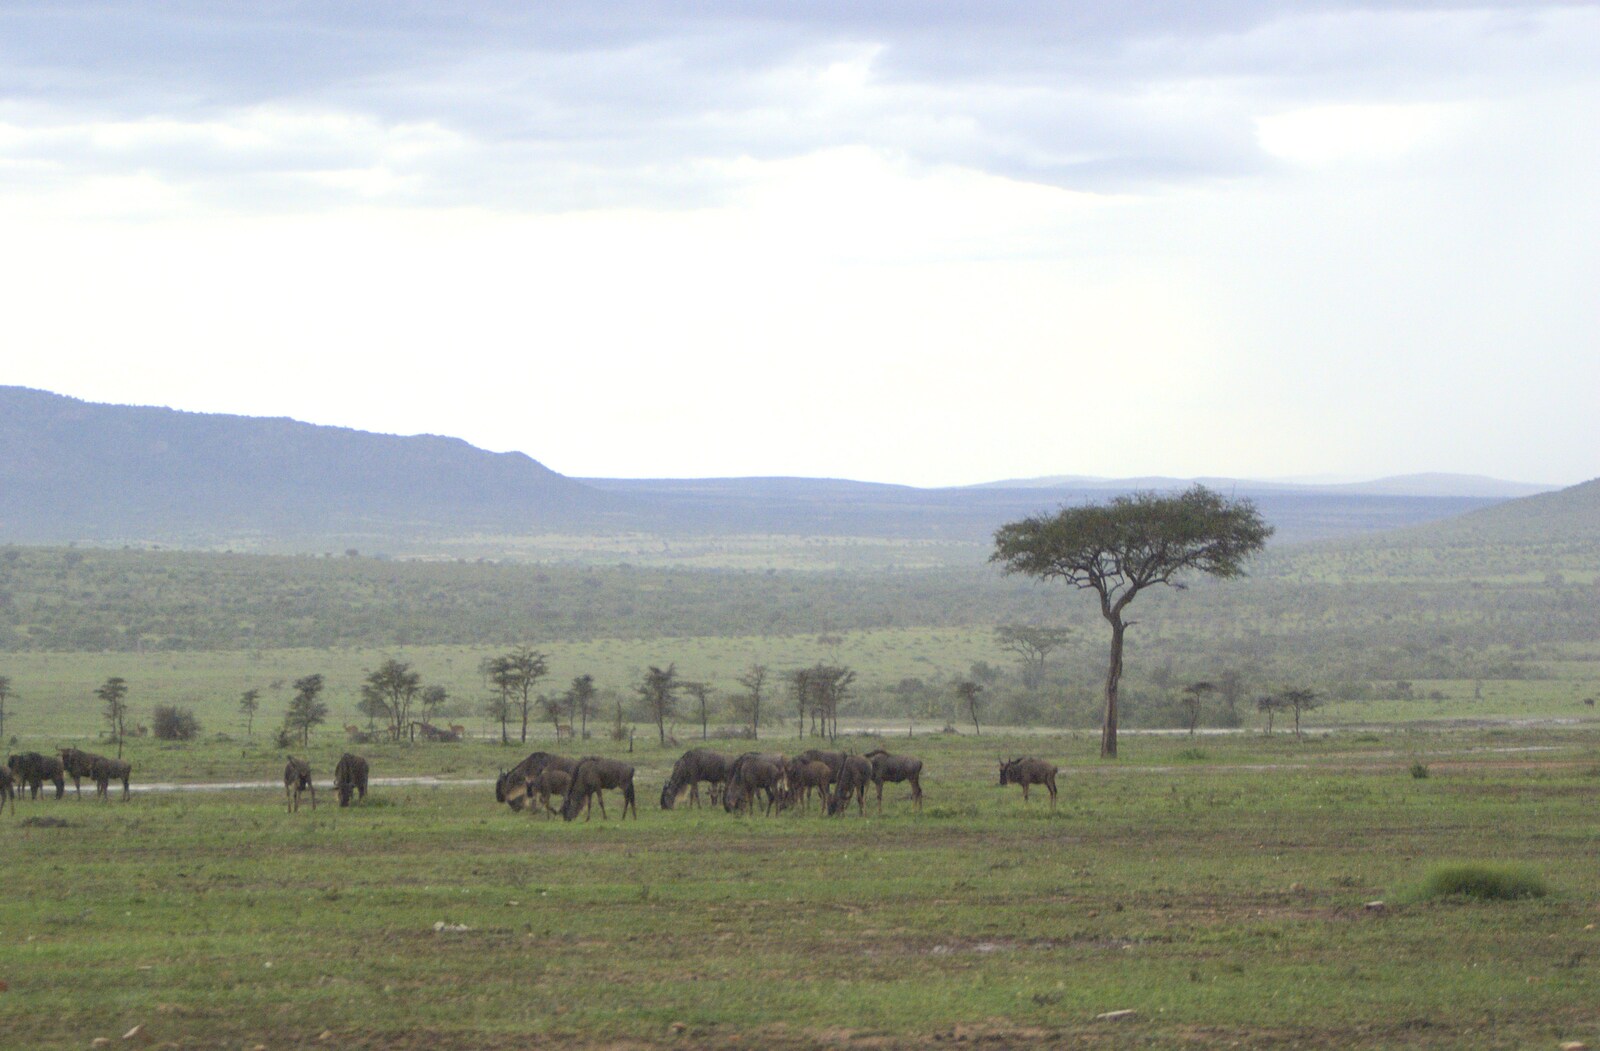 A herd of Wildebeest from Maasai Mara Safari and a Maasai Village, Ololaimutia, Kenya - 5th November 2010